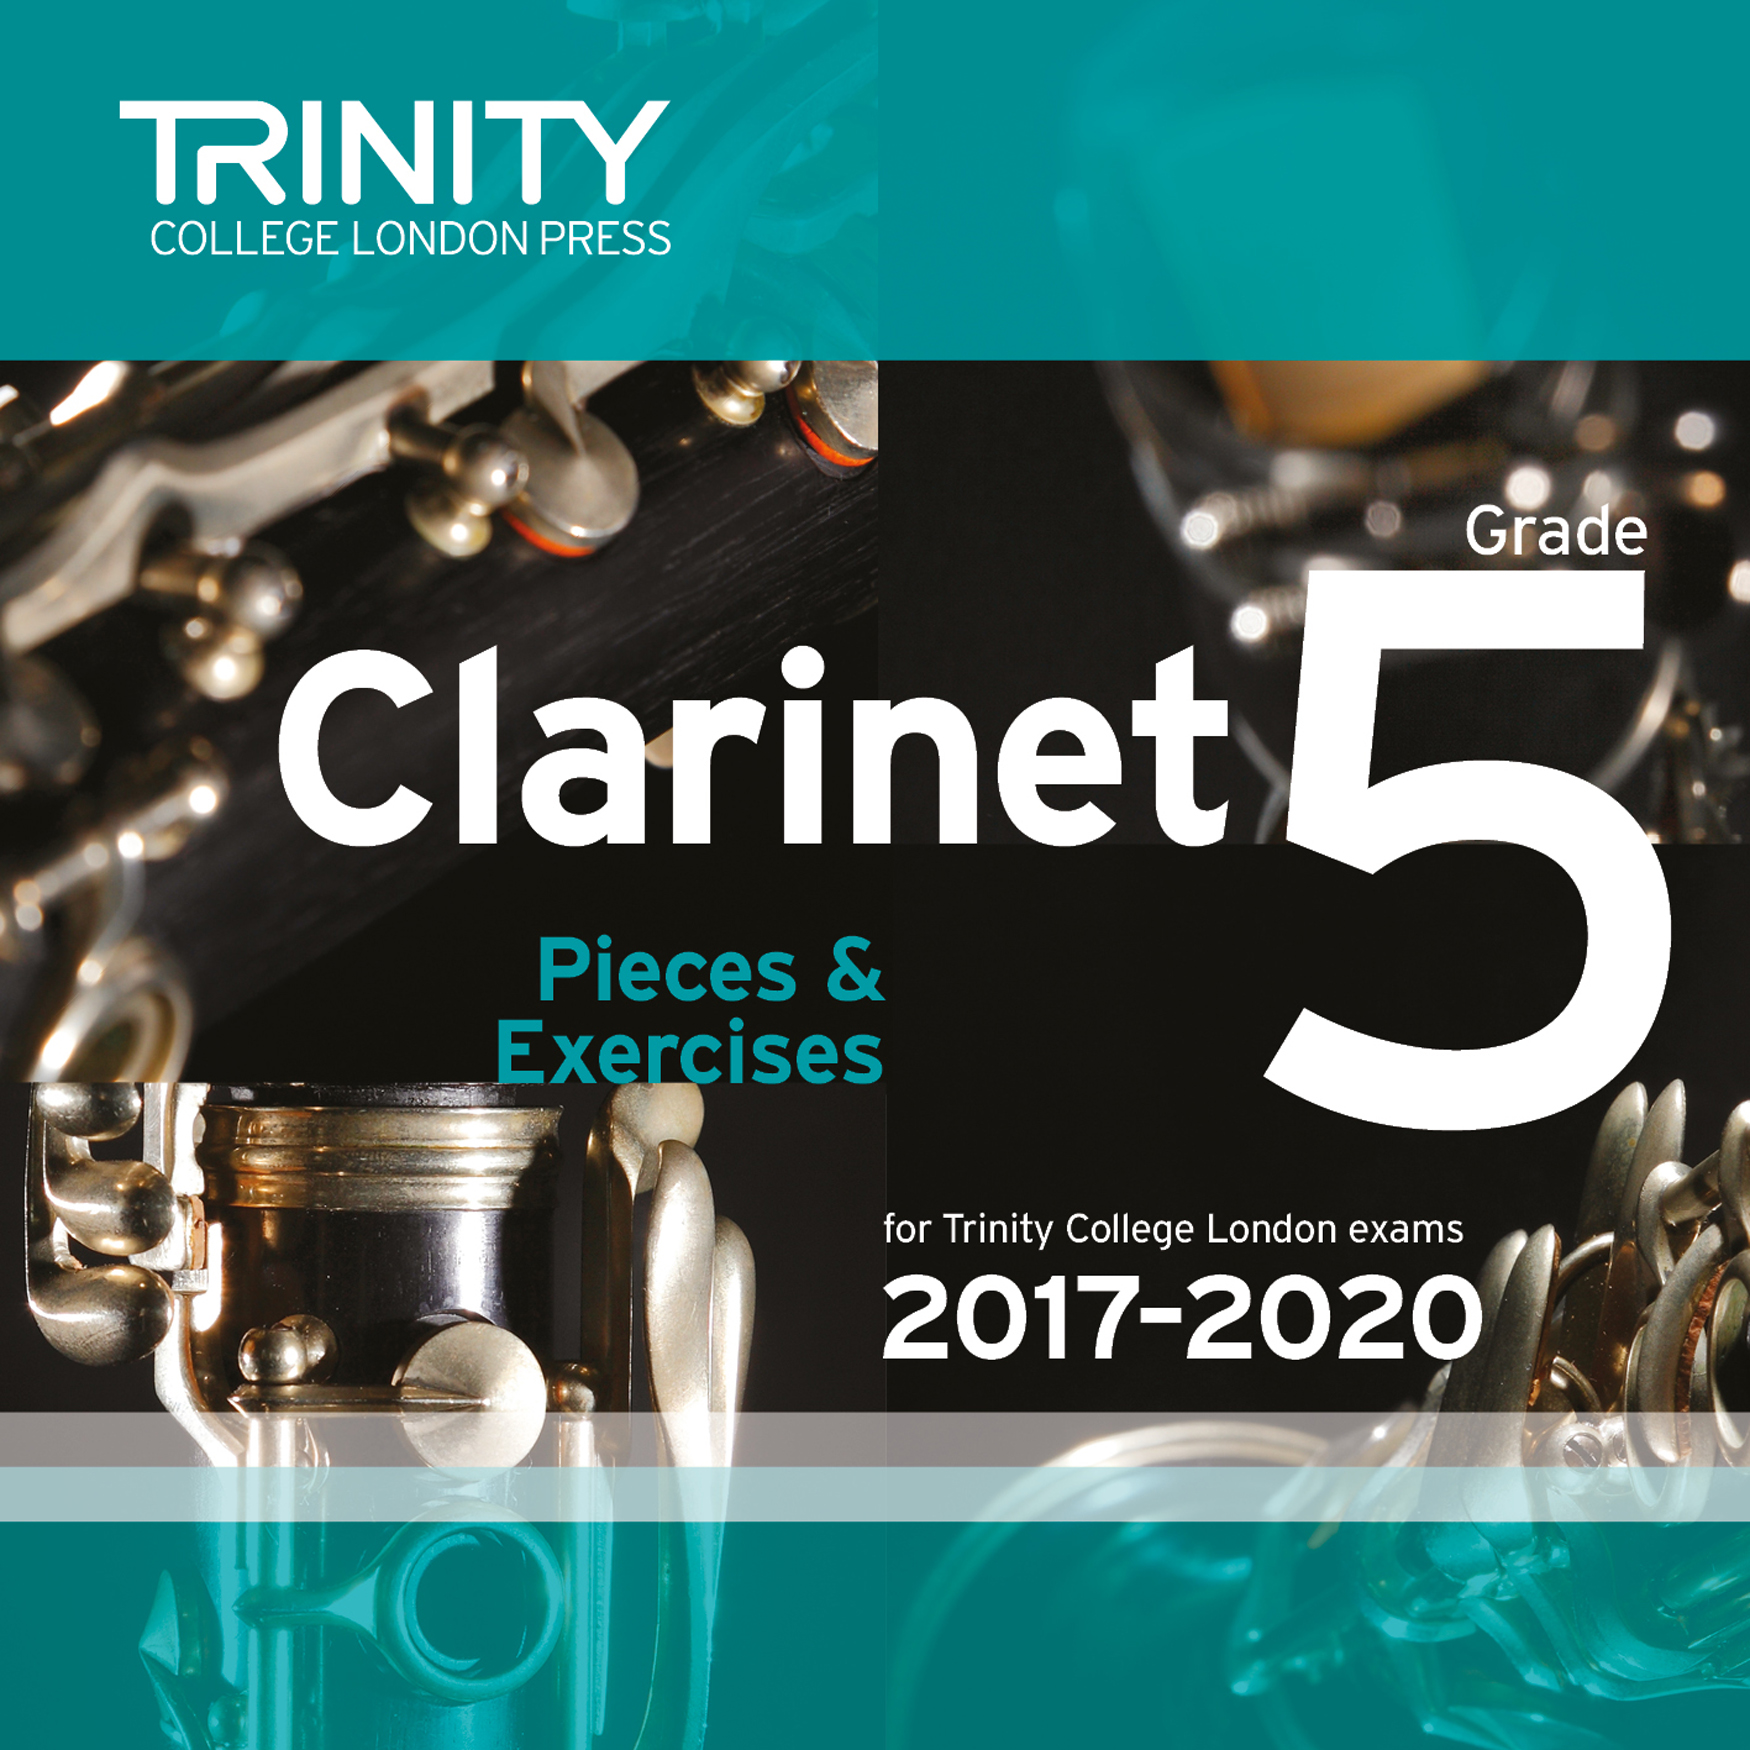 Buy CLARINET scores, sheet music : EXAMS